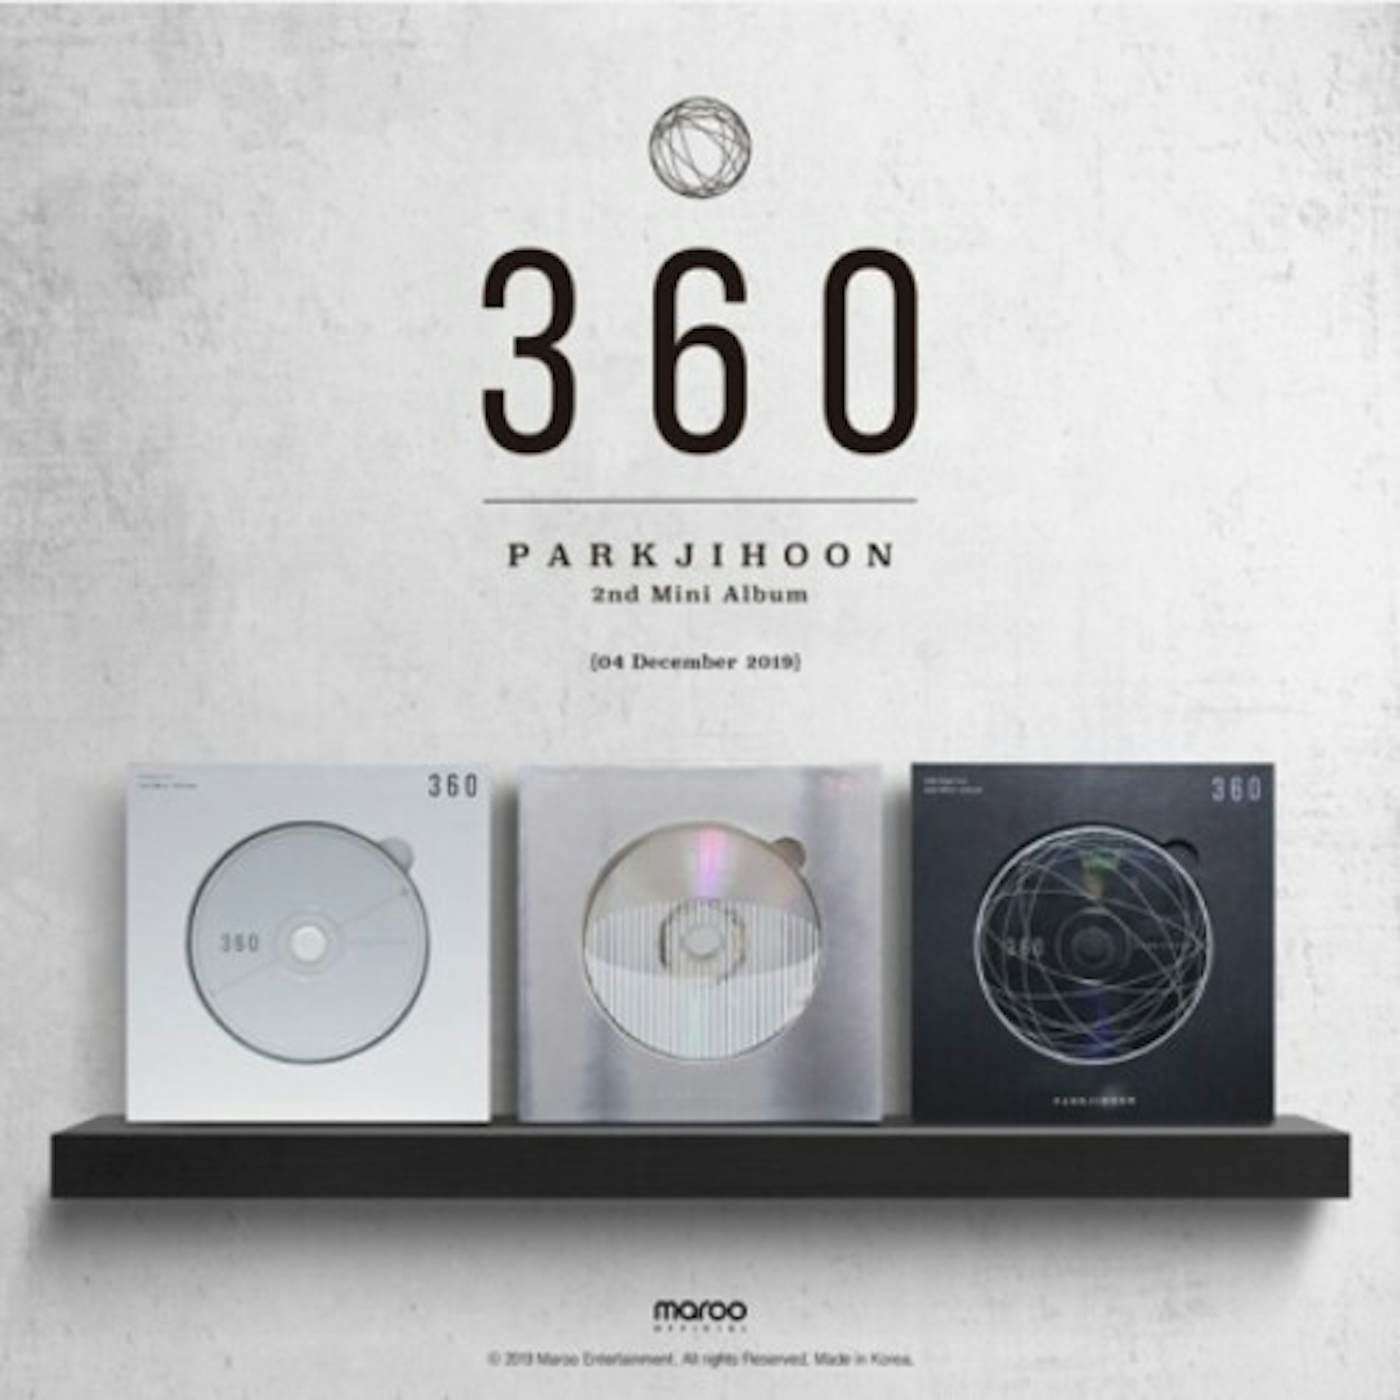 PARK JI HOON 360 CD